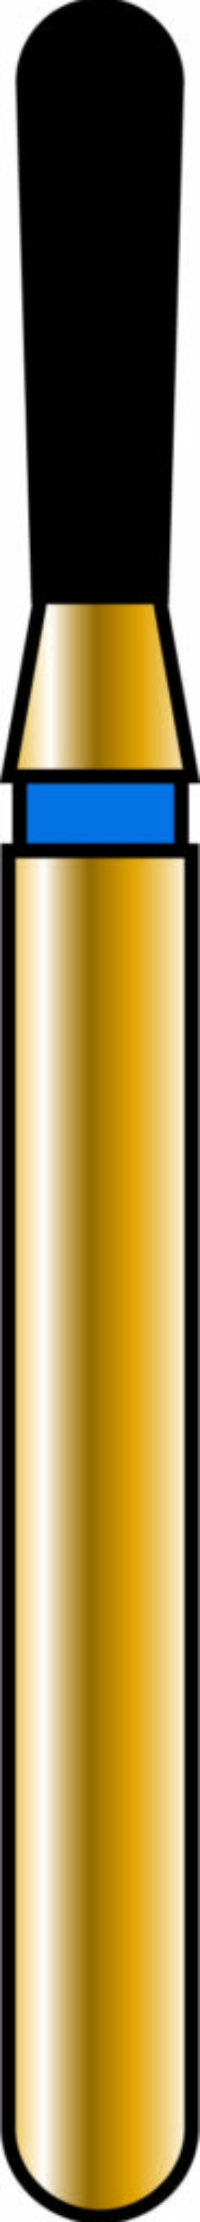 Pear 14-5mm Gold Diamond Bur - Coarse Grit